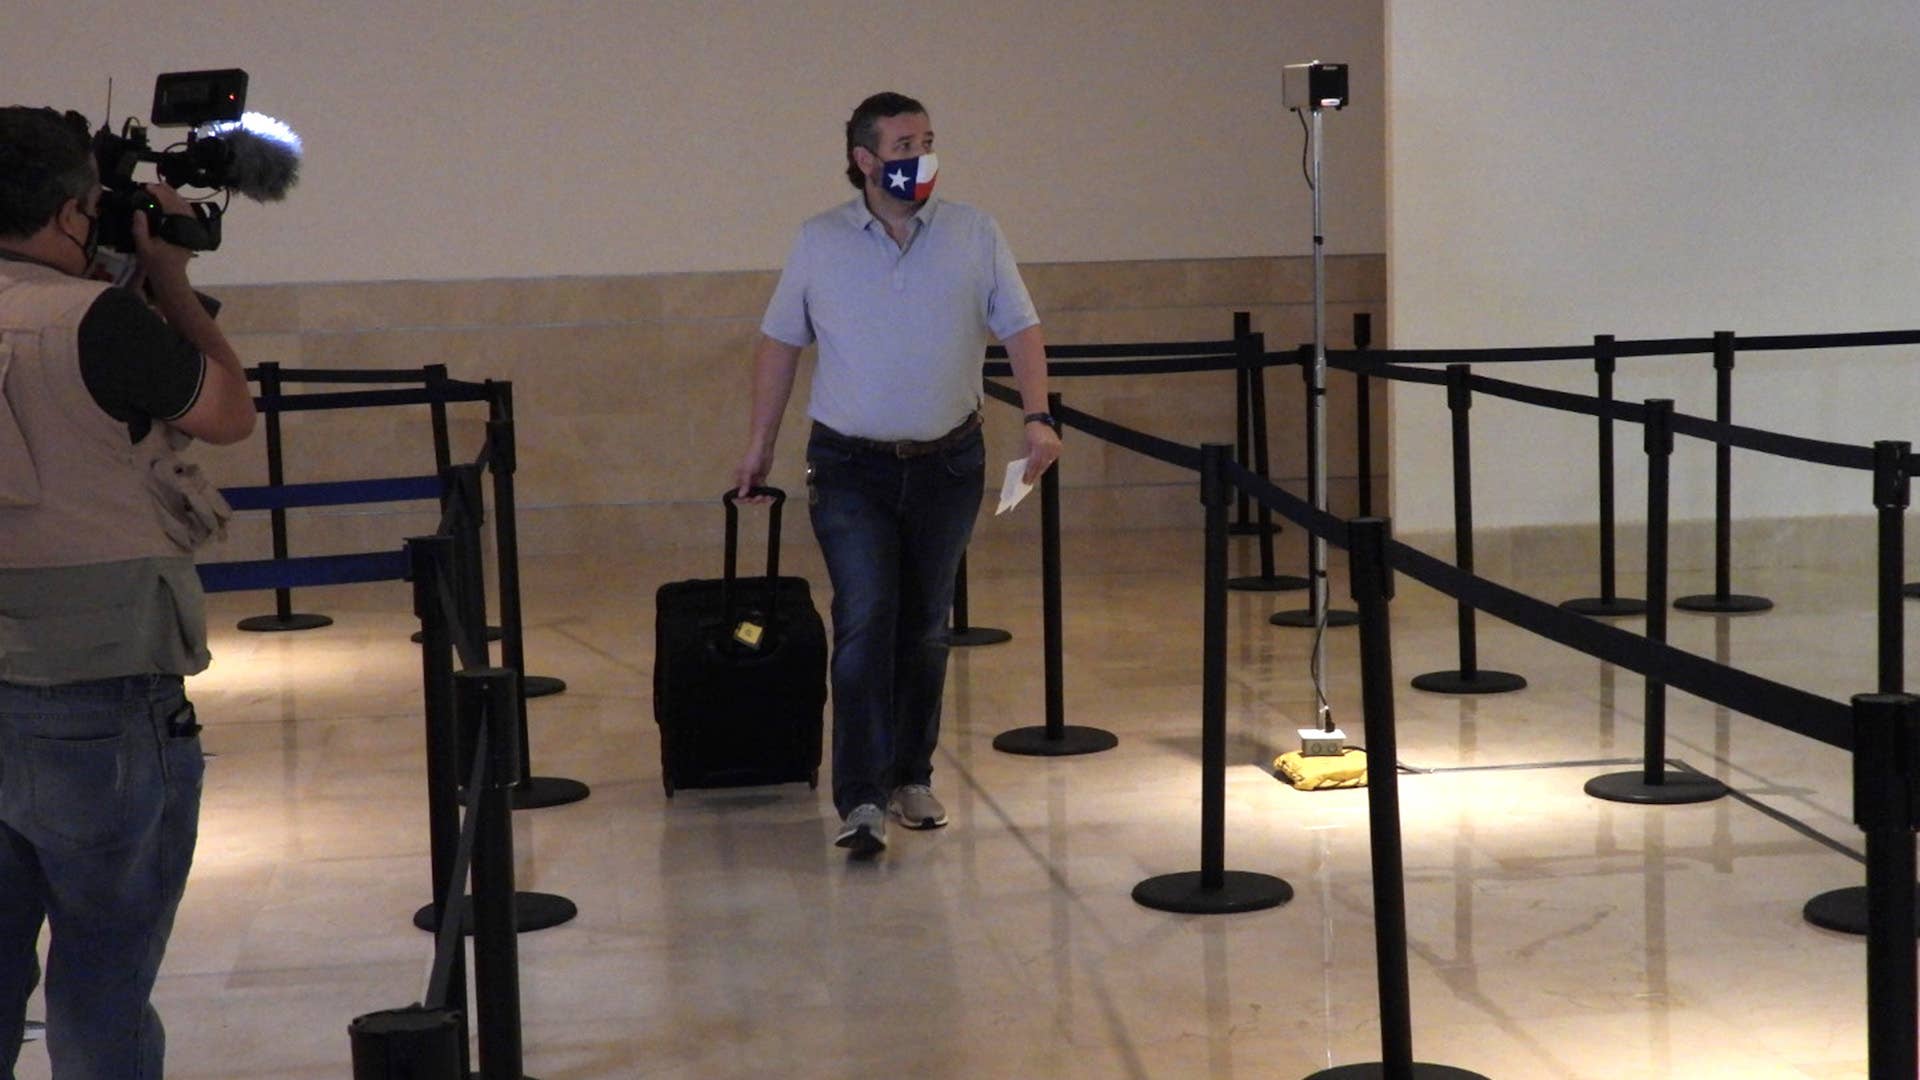 Sen. Ted Cruz (R TX) checks in for a flight at Cancun International Airport